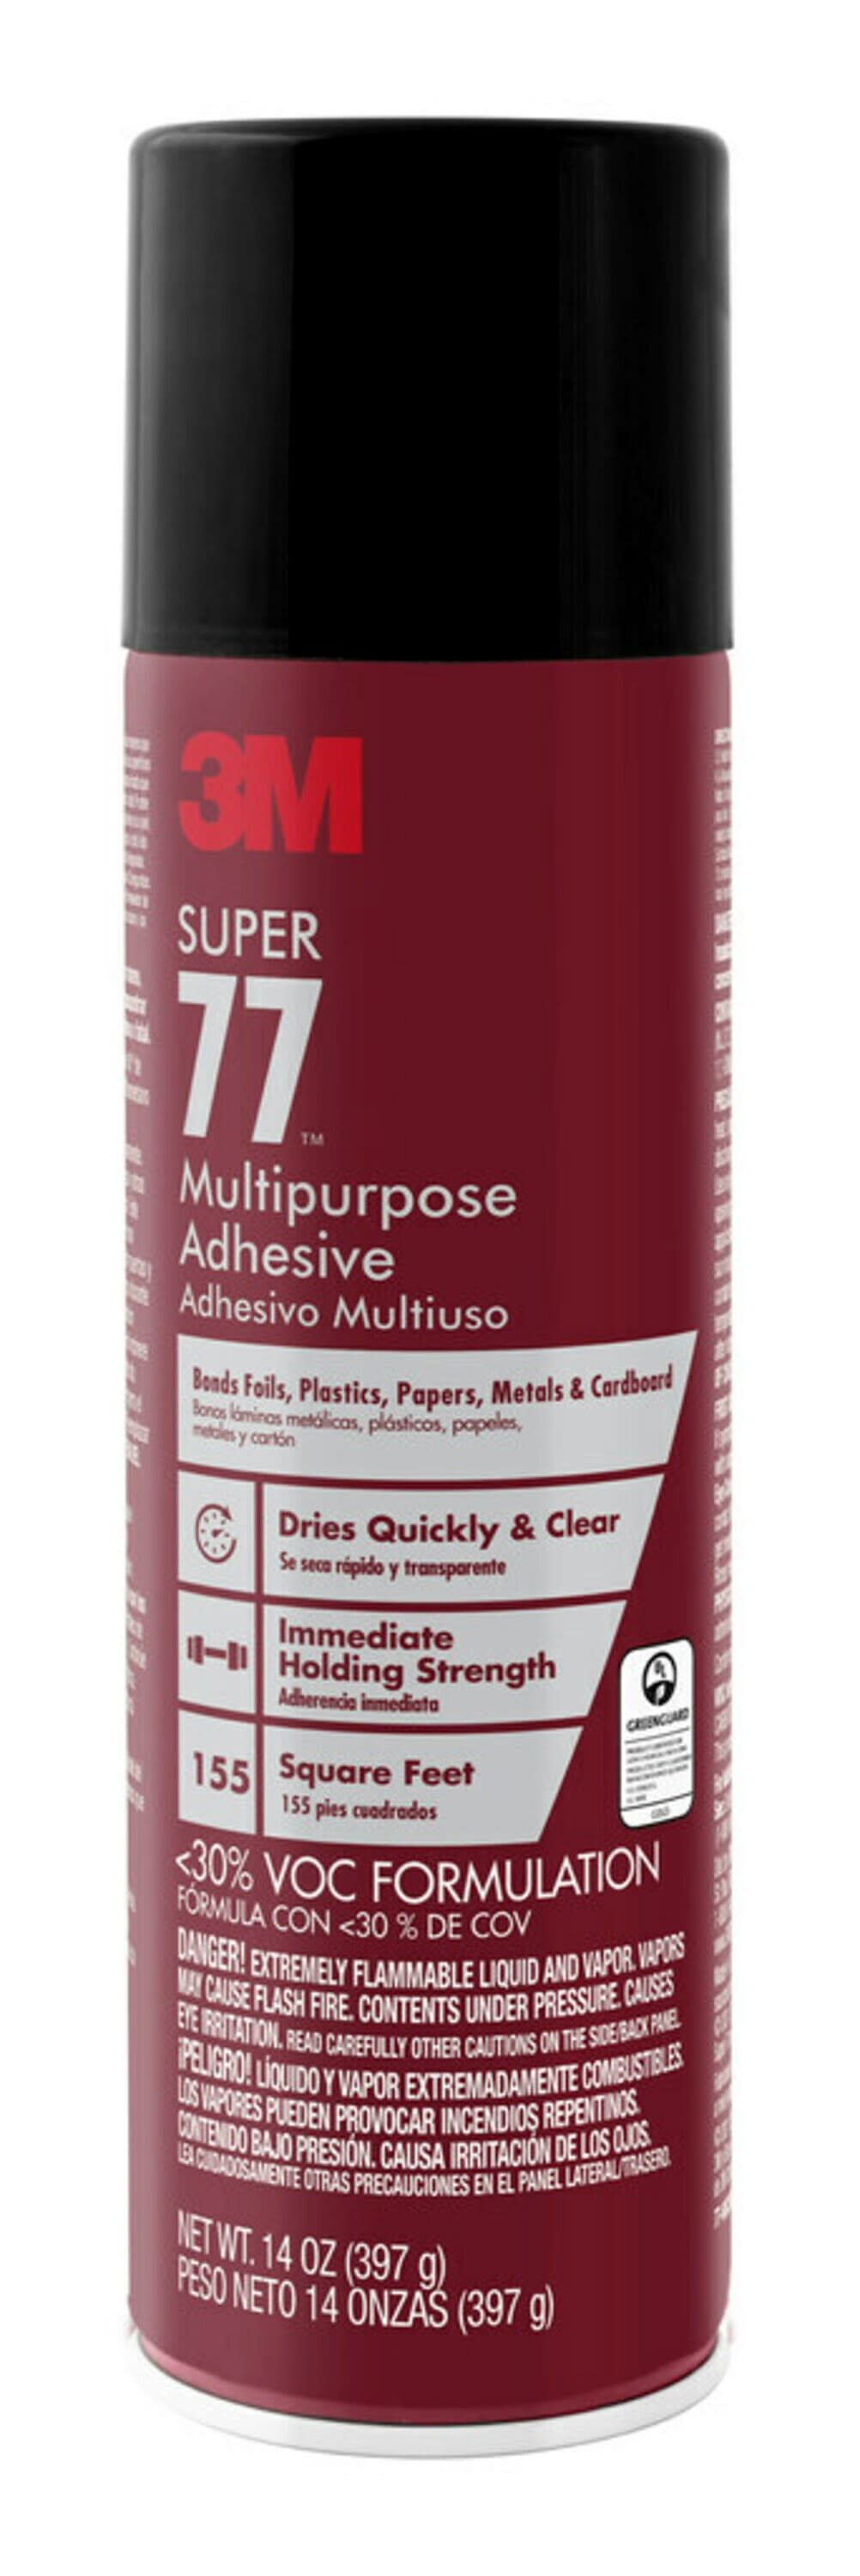 Adhesive, 3M Spray SUPER 77, 17oz @